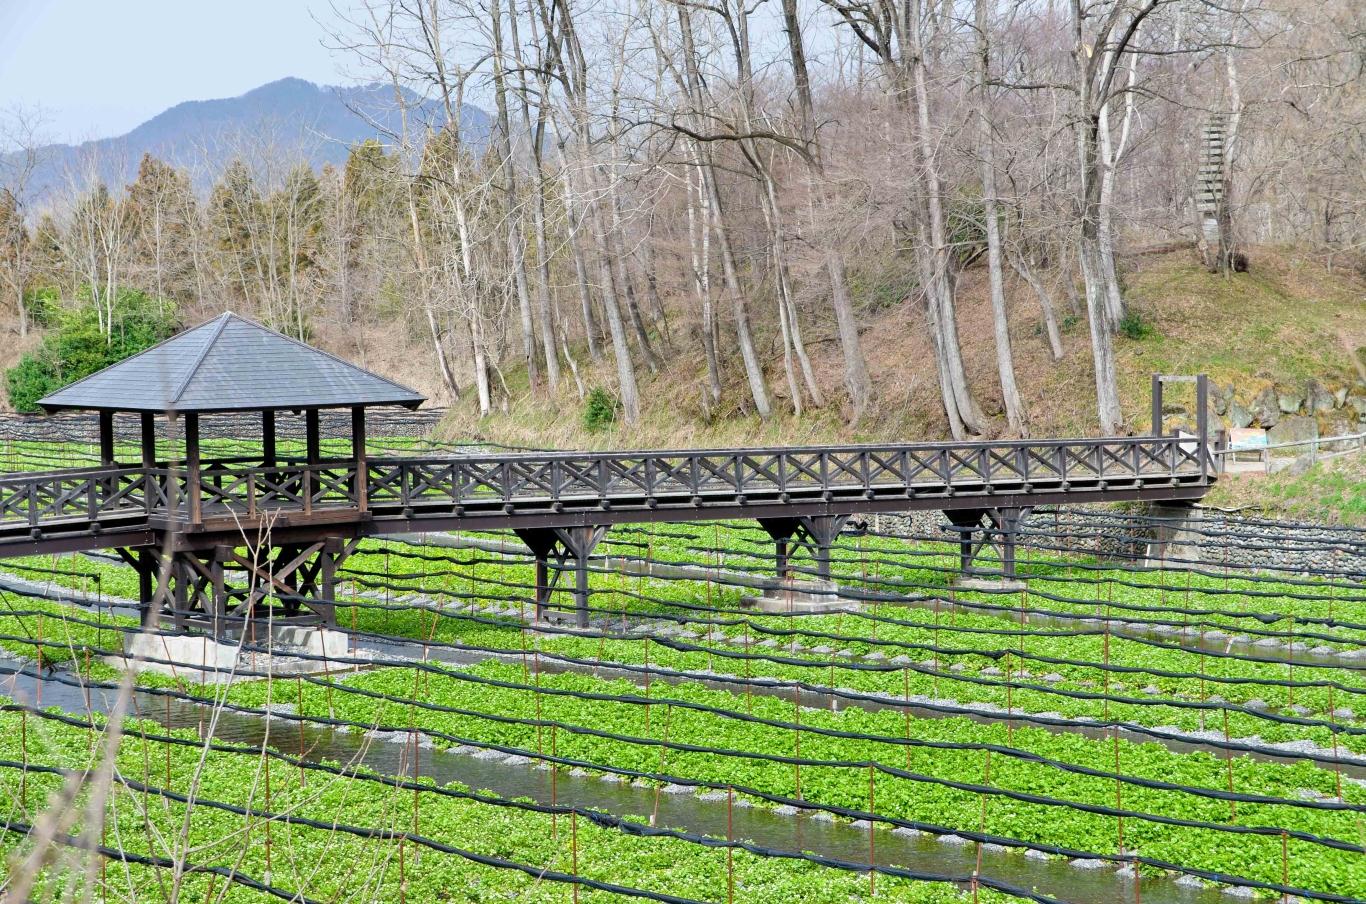 Daio wasabi: Nông trại wasabi lớn nhất Nhật Bản – Genki Japan House